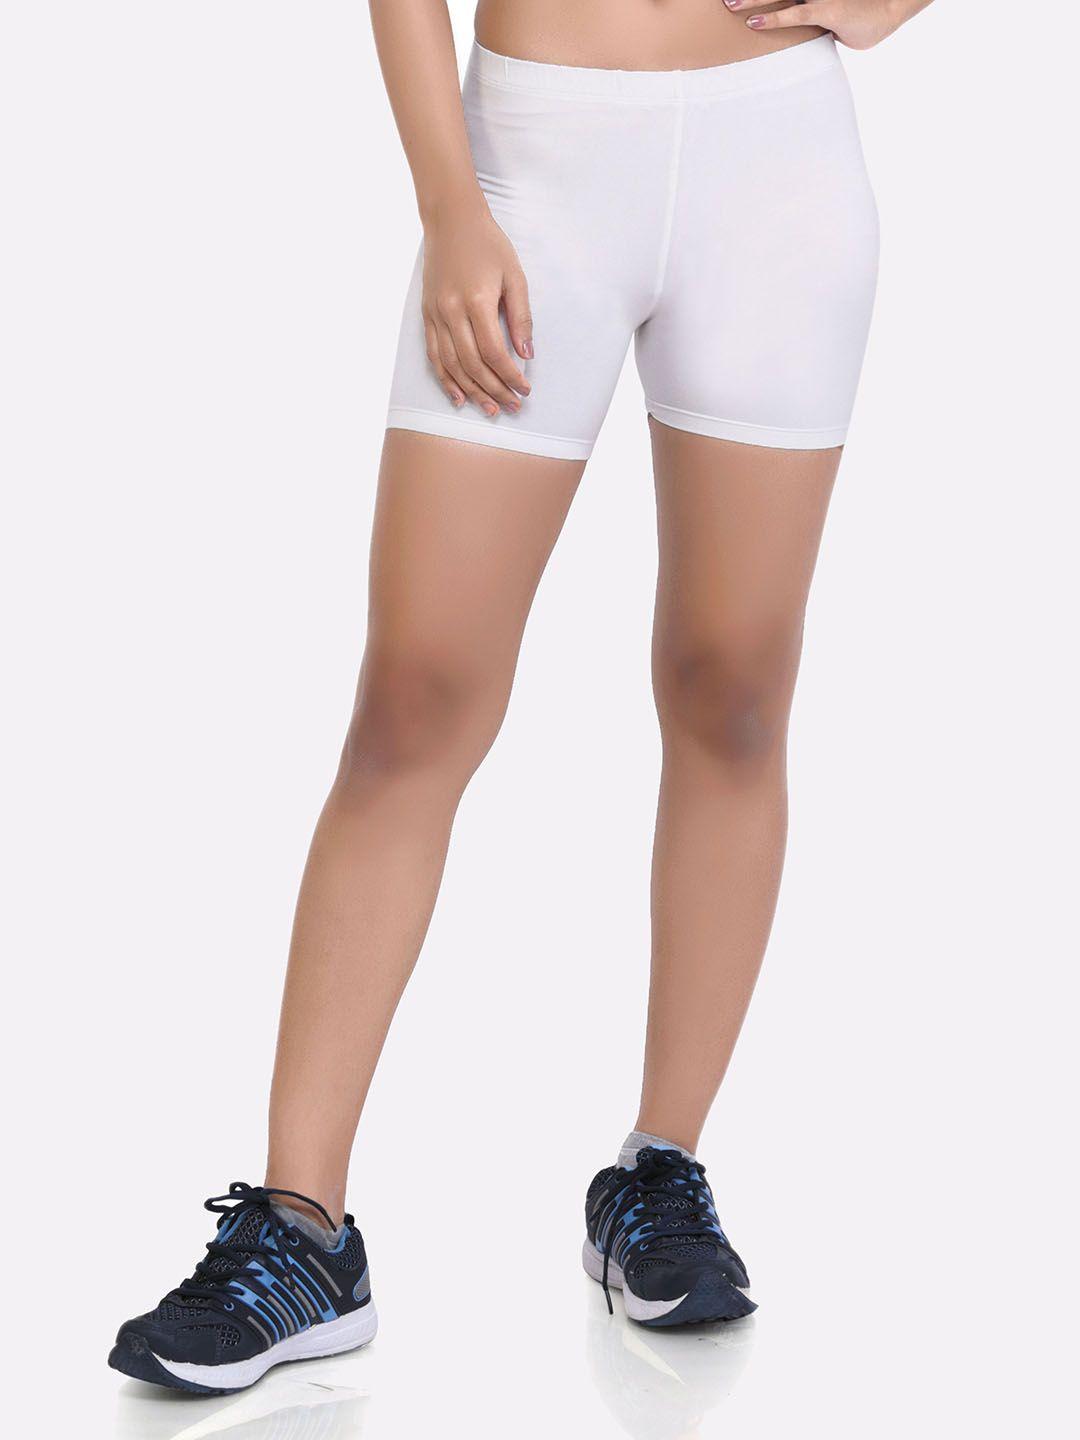 laasa sports women white skinny fit training or gym sports shorts